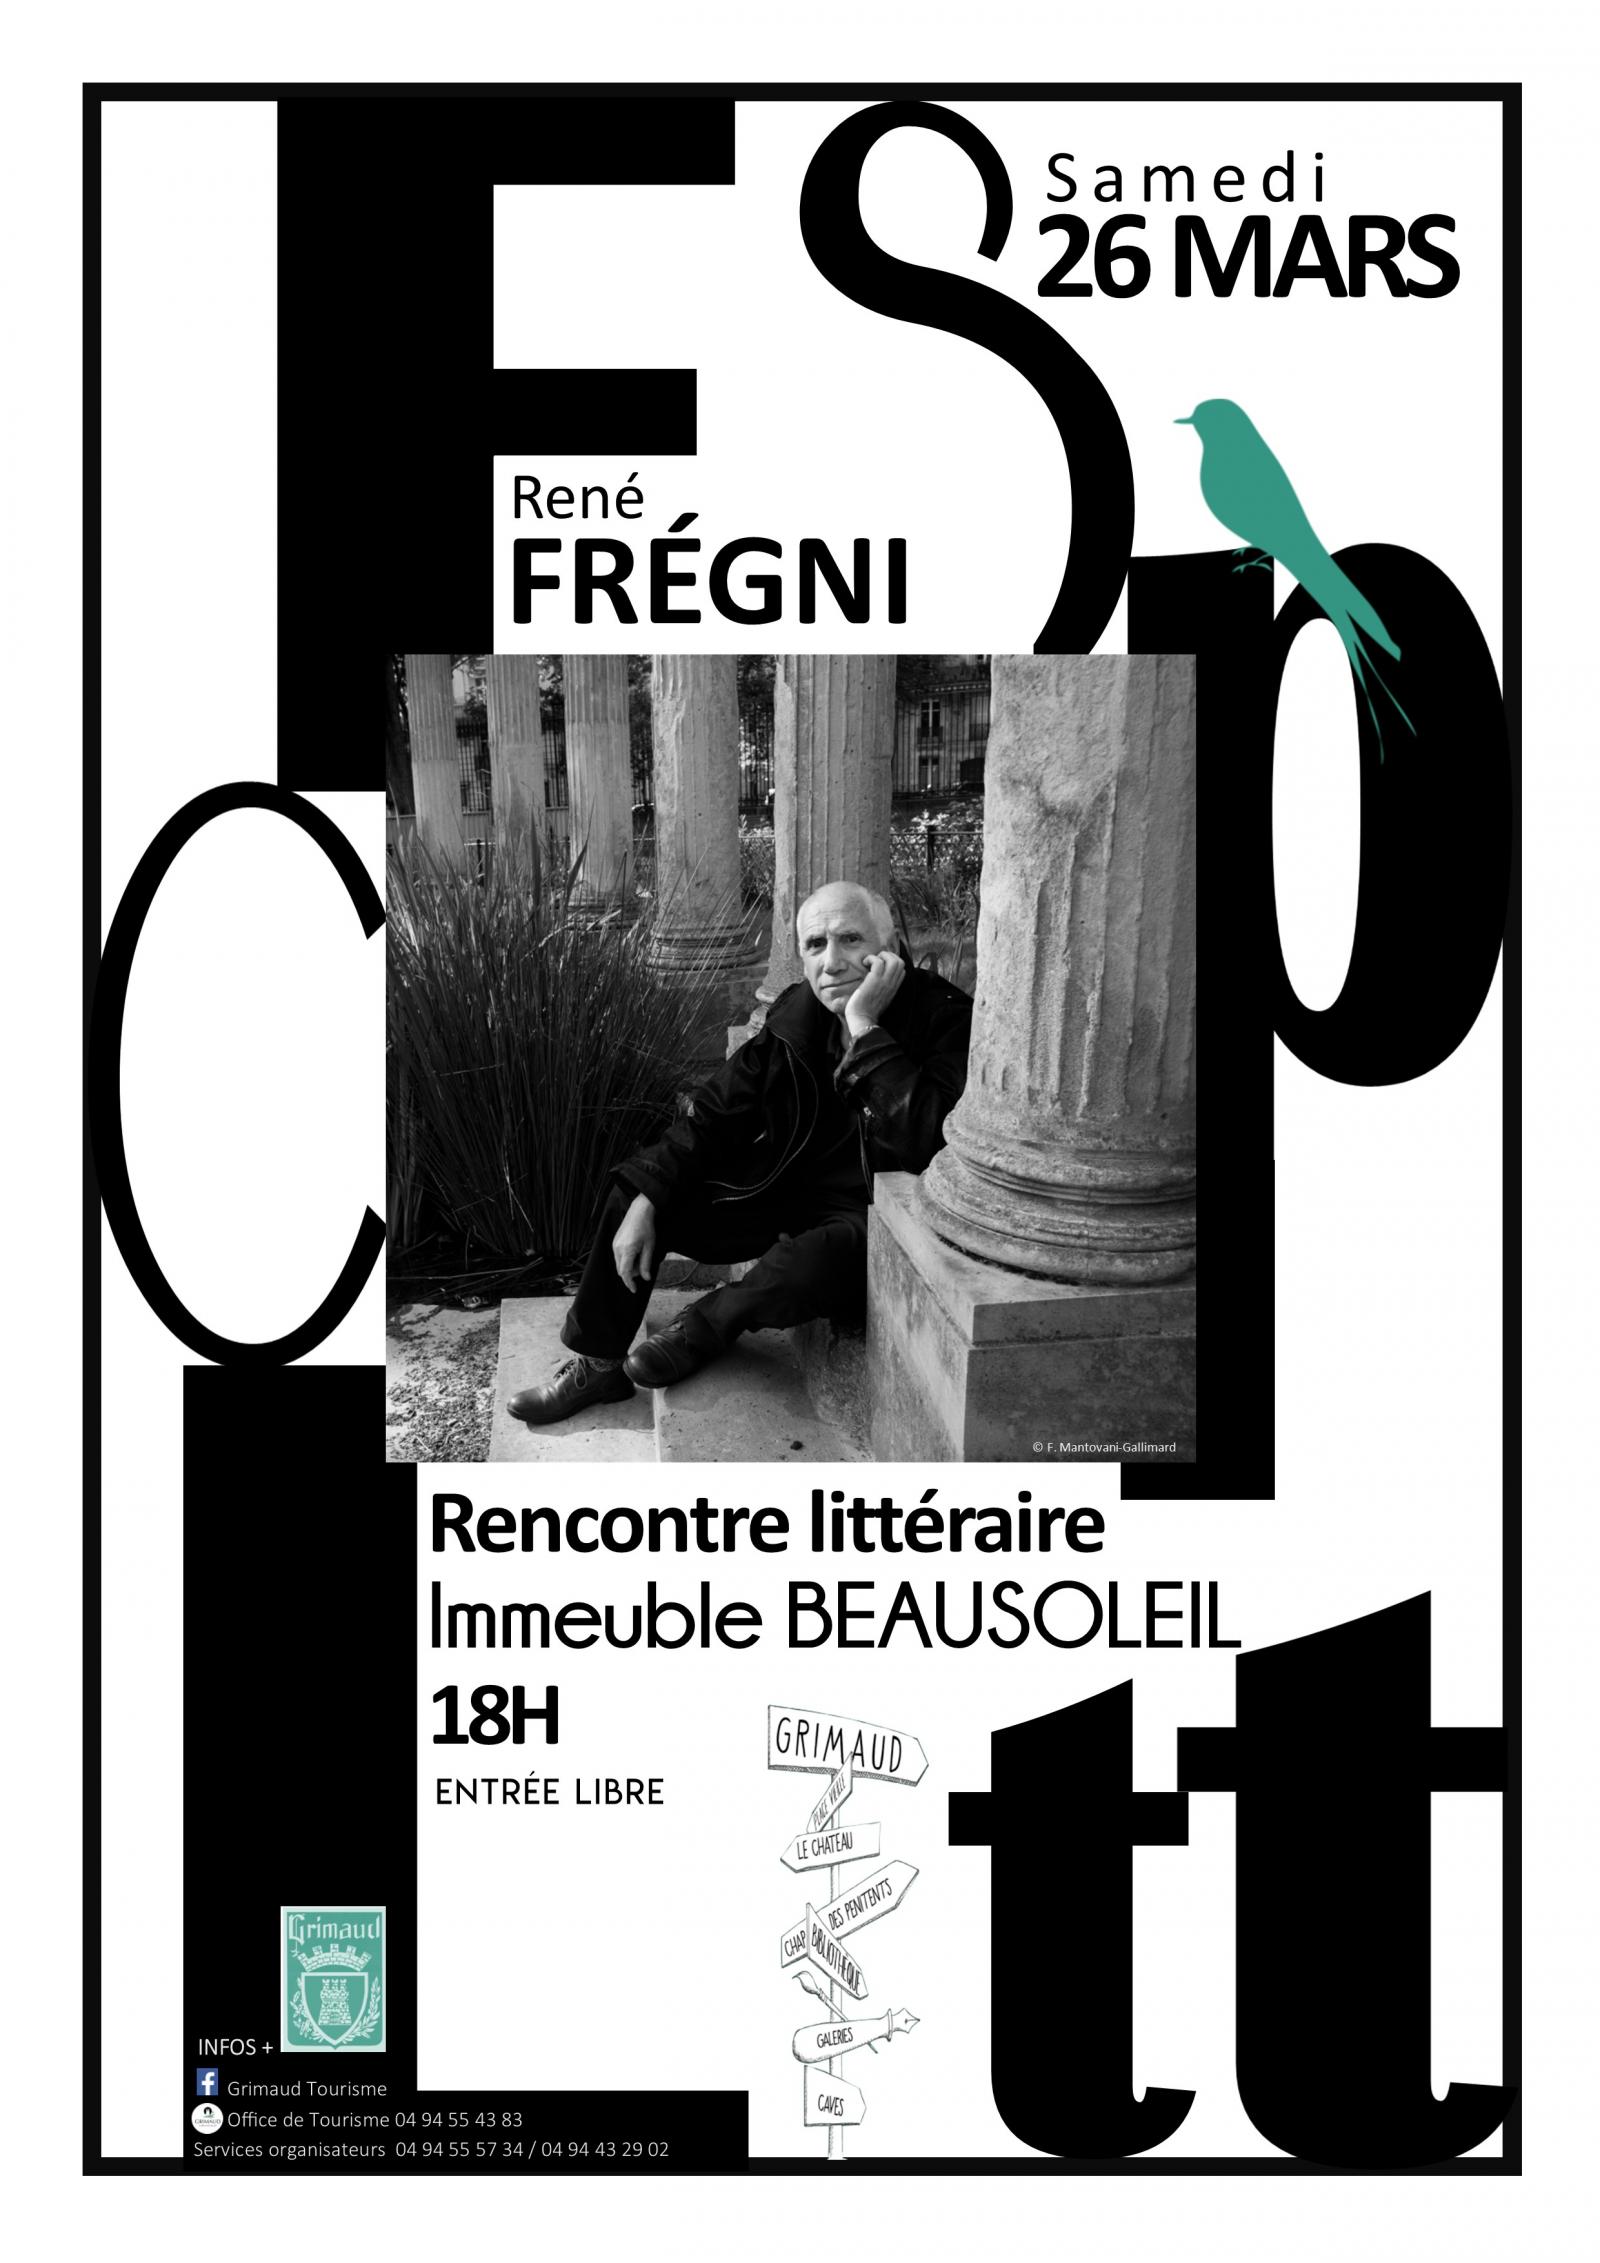 Saturday March 26, 2022: Literary Getaway with René FREGNI